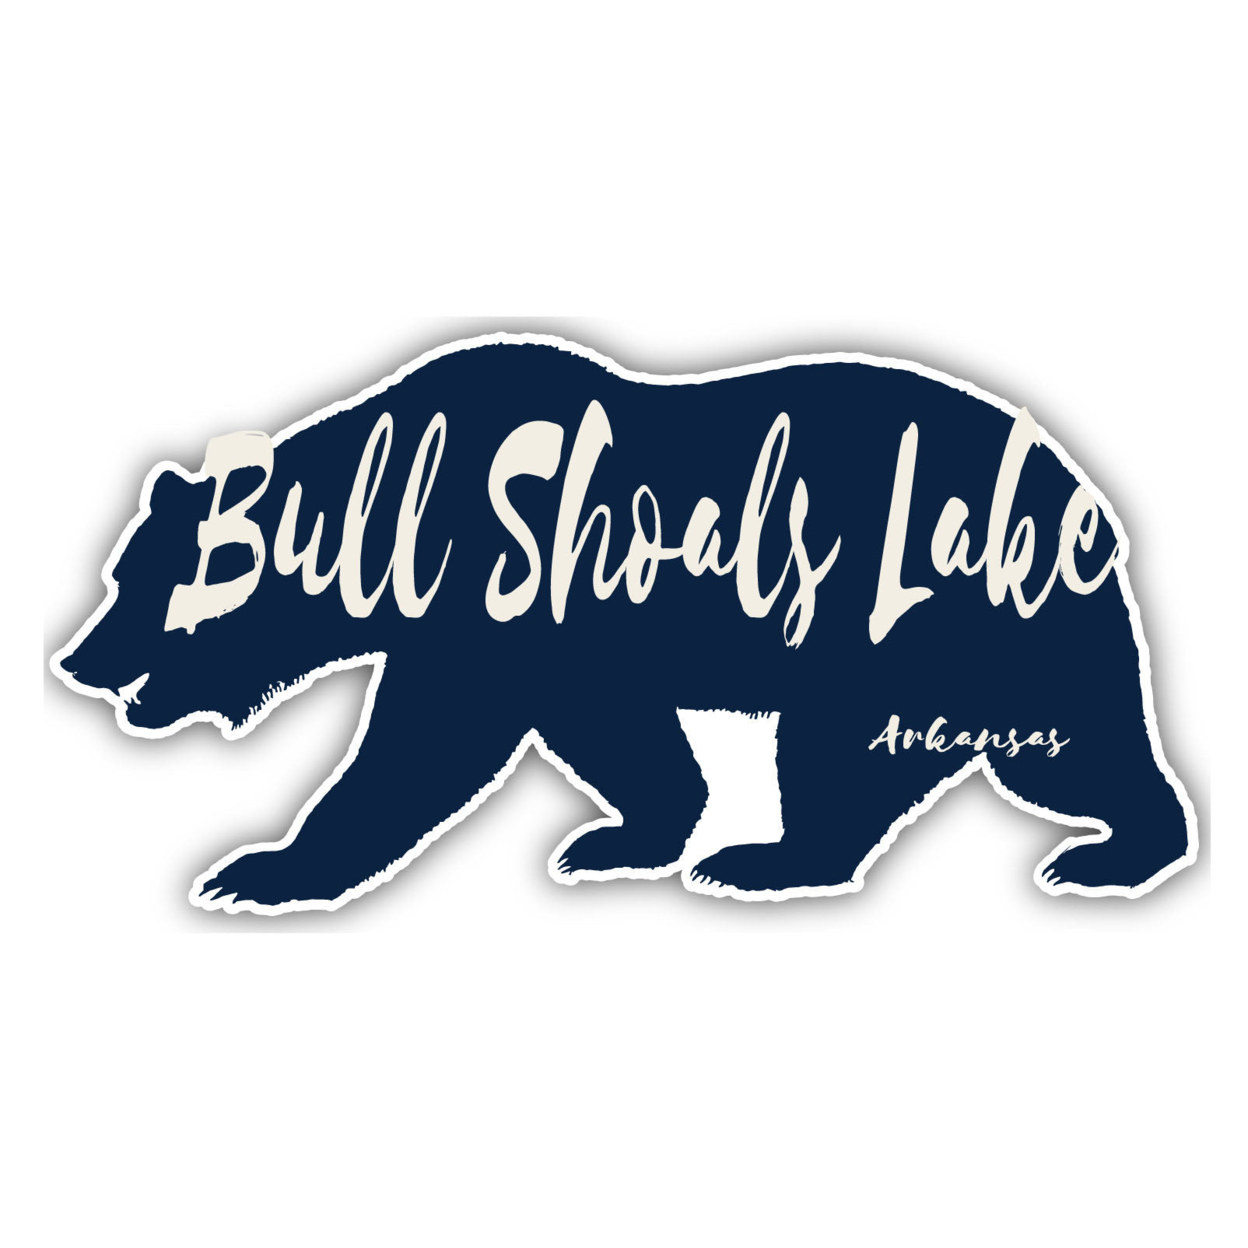 Bull Shoals Lake Arkansas Souvenir Decorative Stickers (Choose Theme And Size) - 4-Pack, 2-Inch, Tent